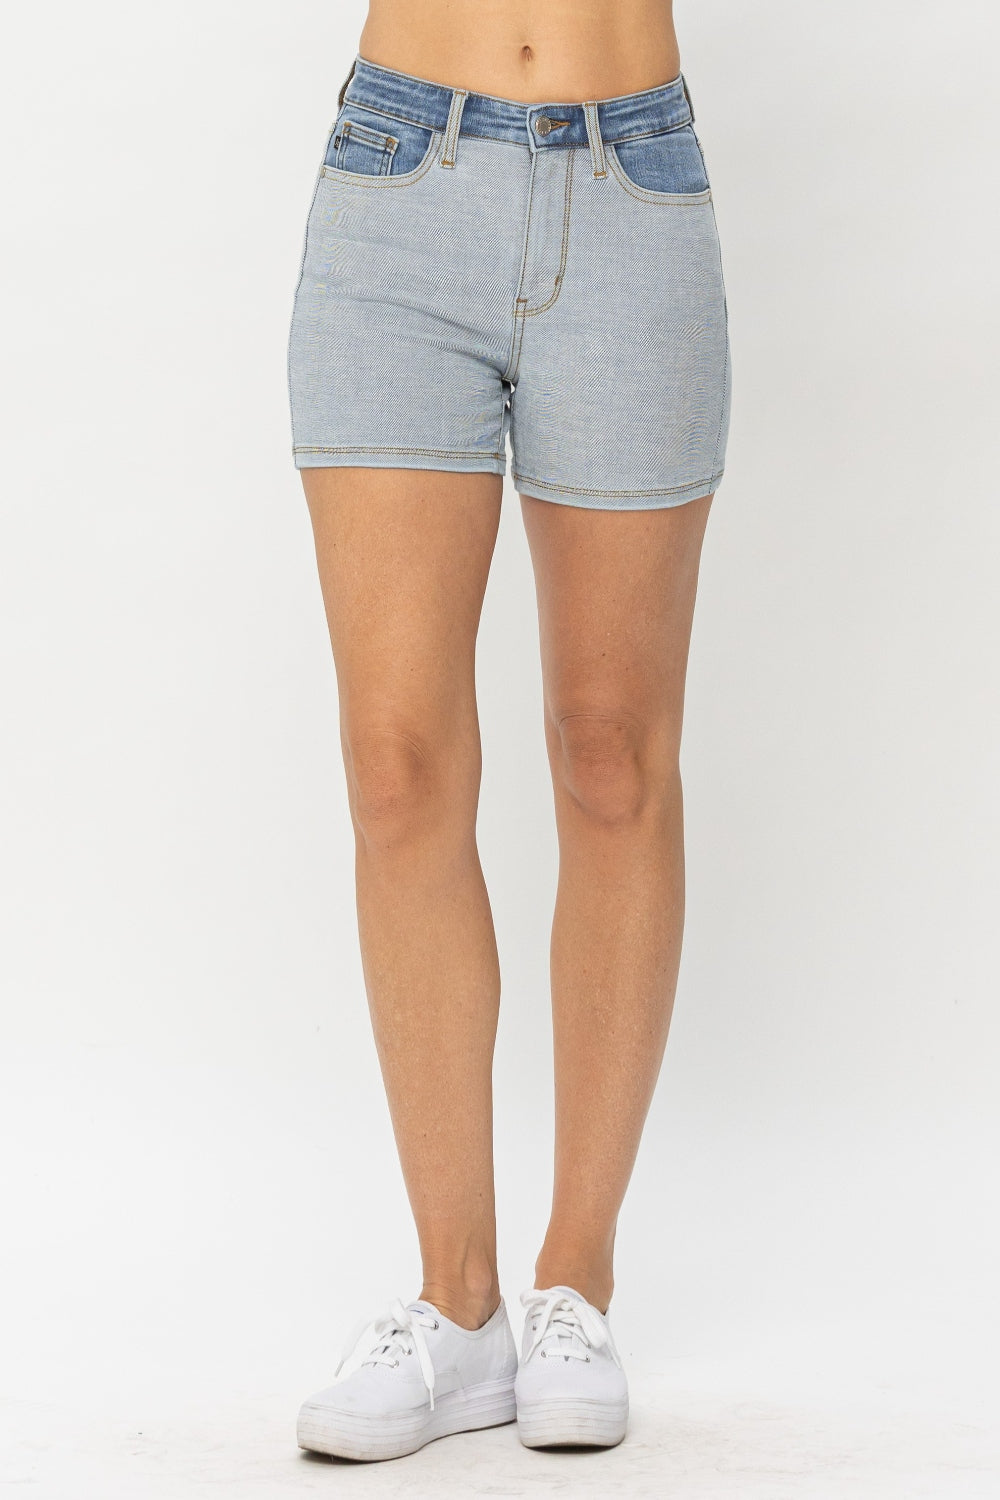 Judy Blue Full Size Color Block Denim Shorts - Scarlett's Riverside Boutique